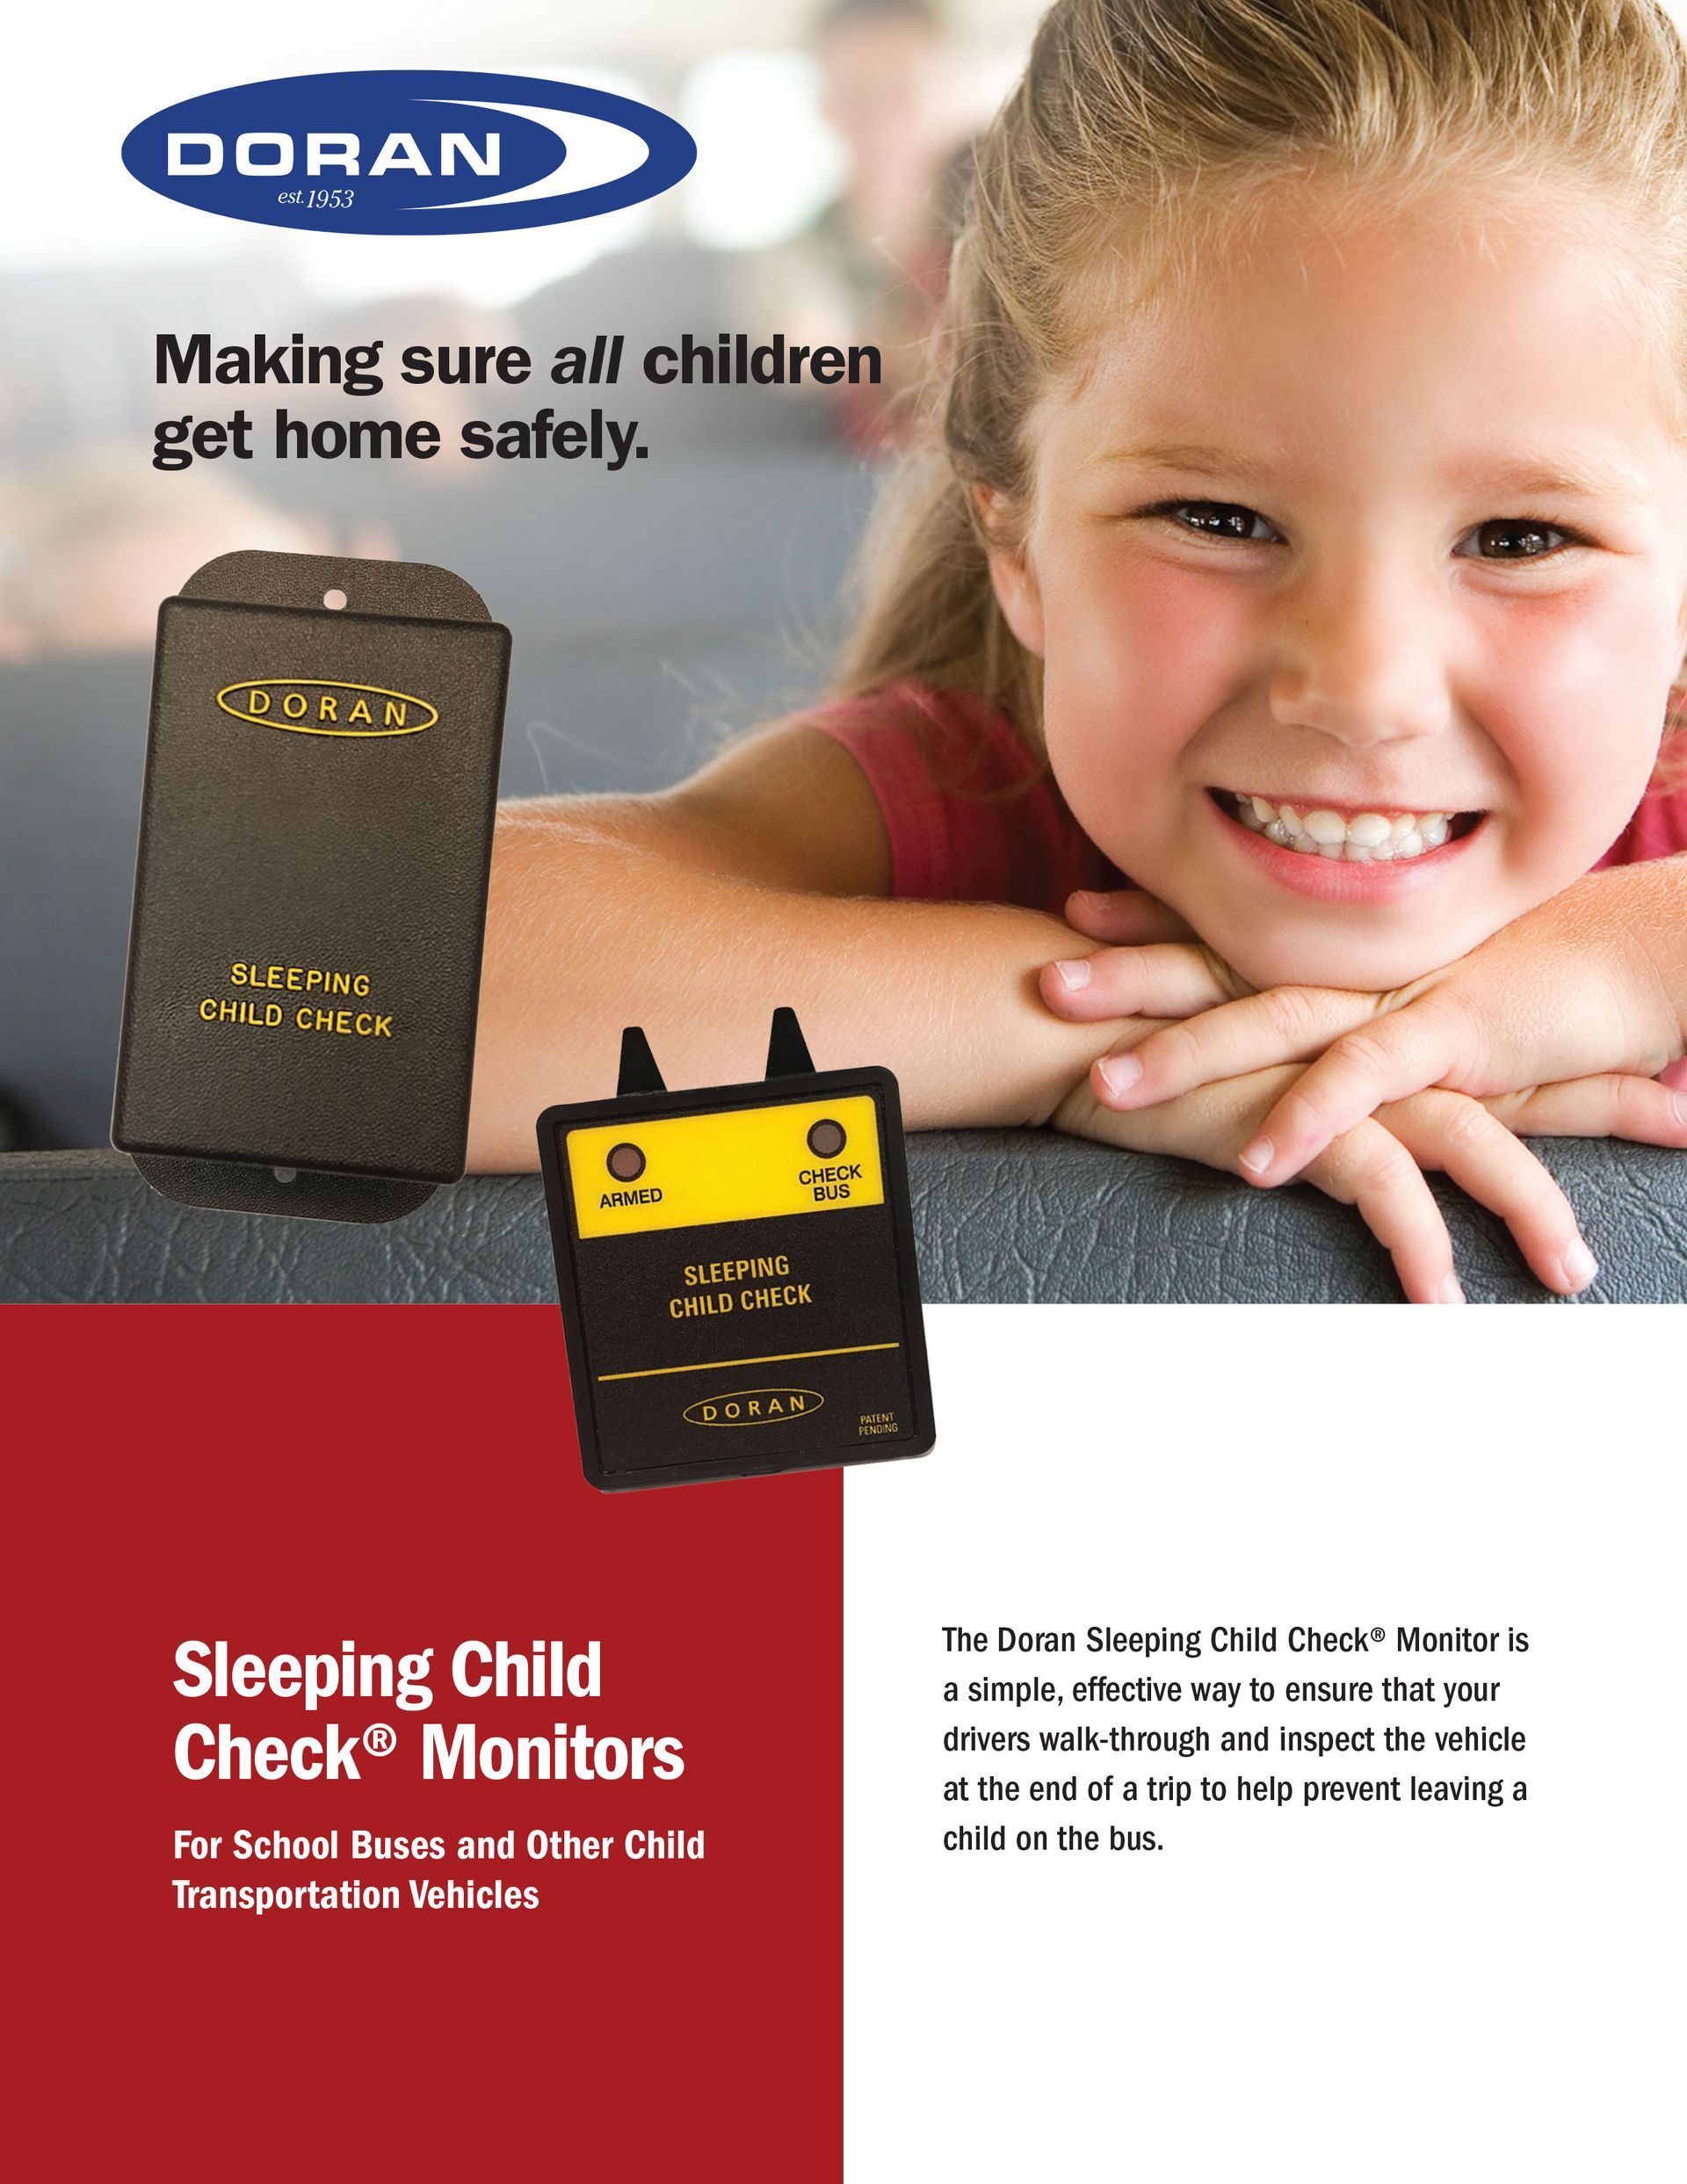 Child Check Monitors